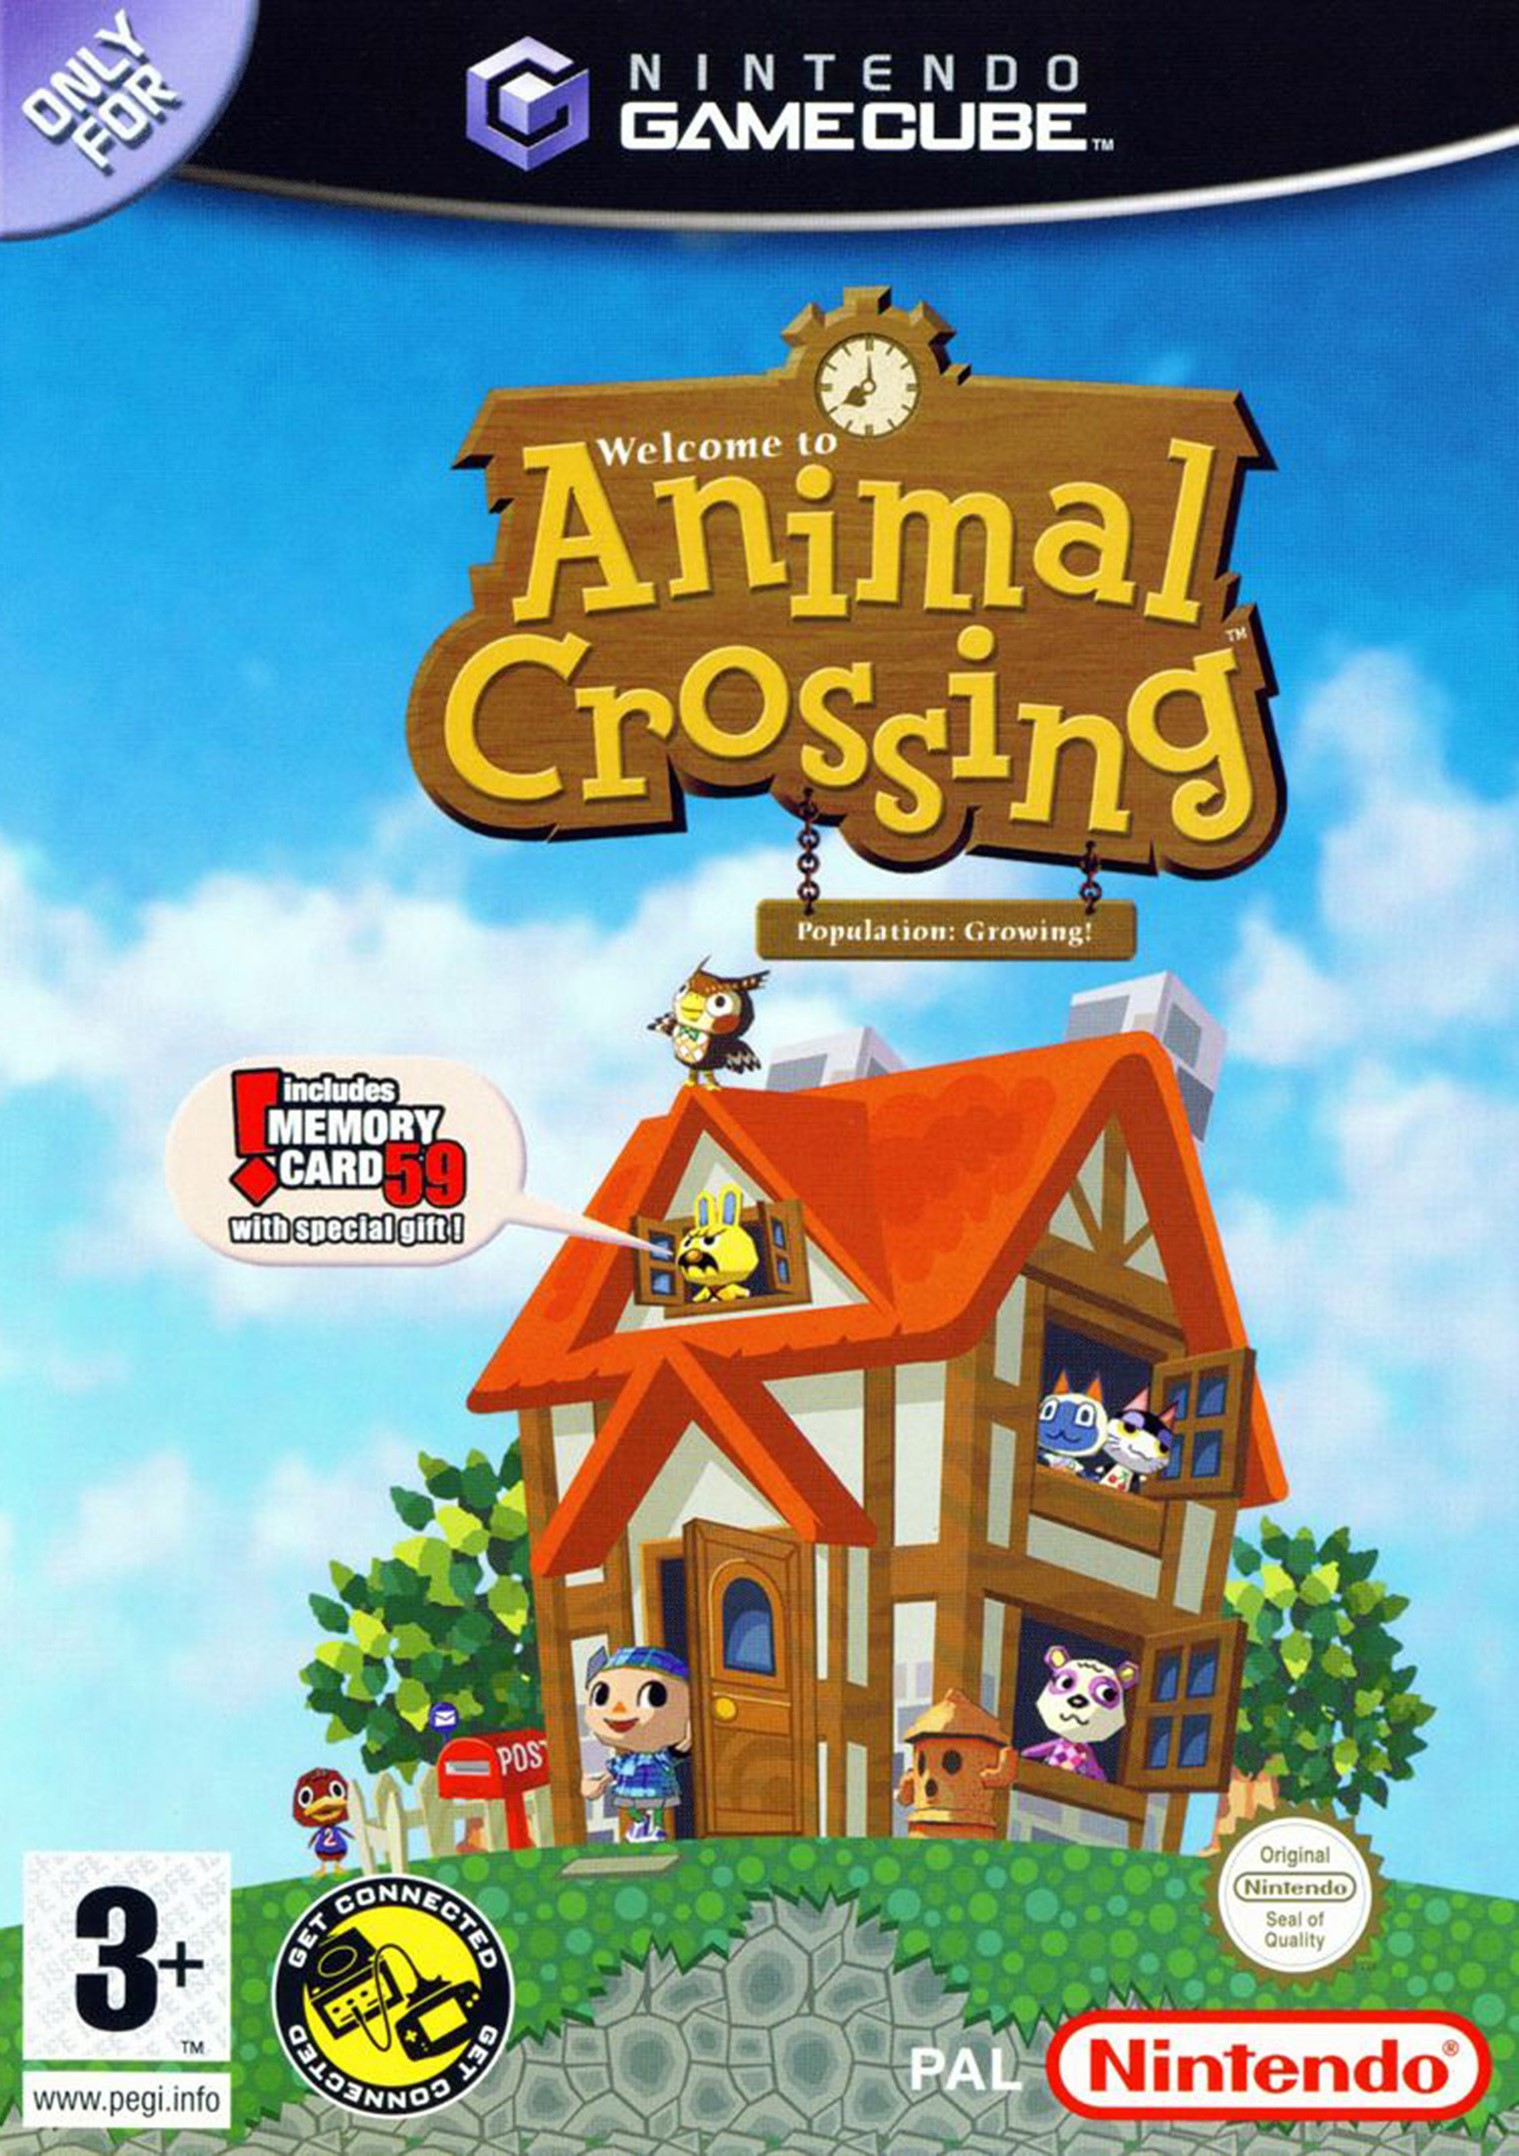 'Animal Crossing'